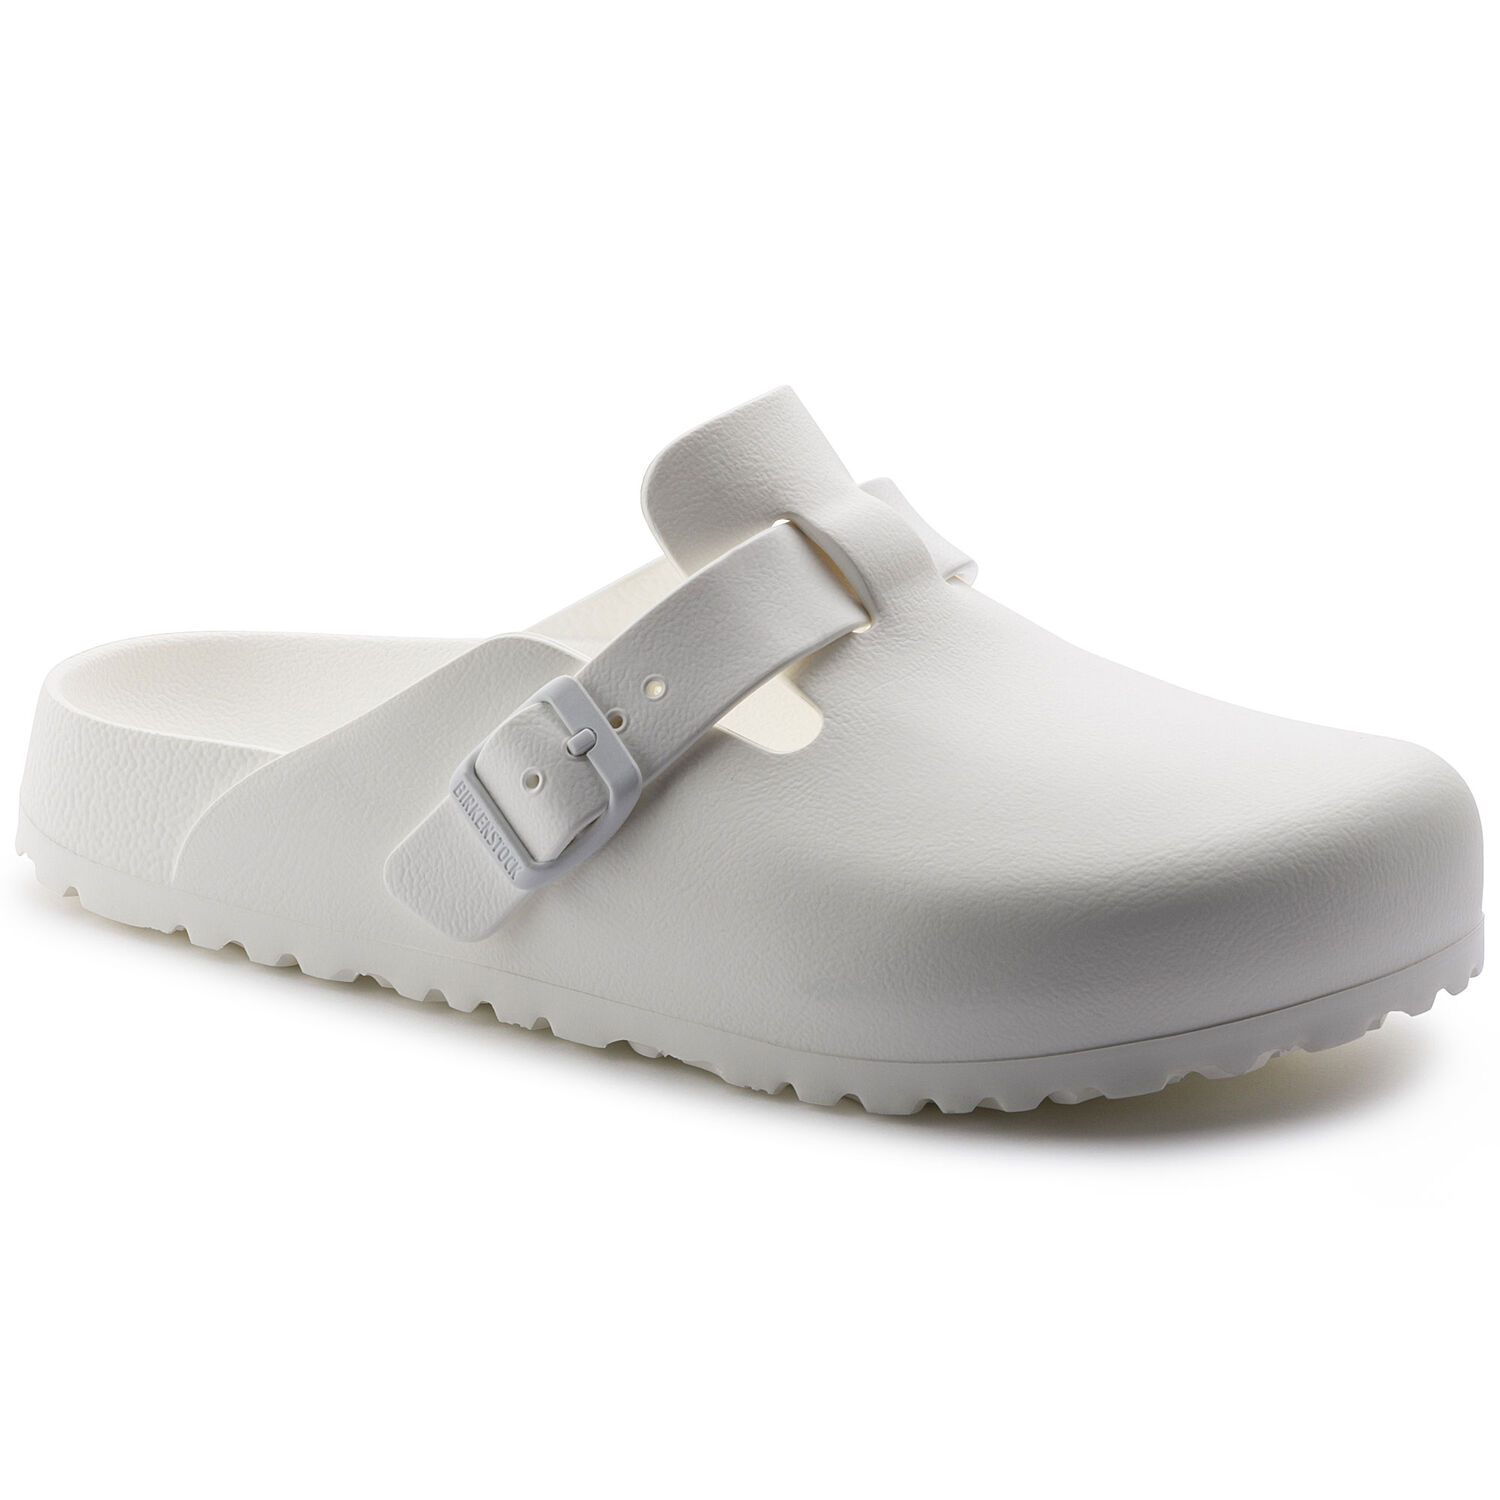 Birkenstock EVA Clogs: The most reliable footwear - ergonomic & waterproof